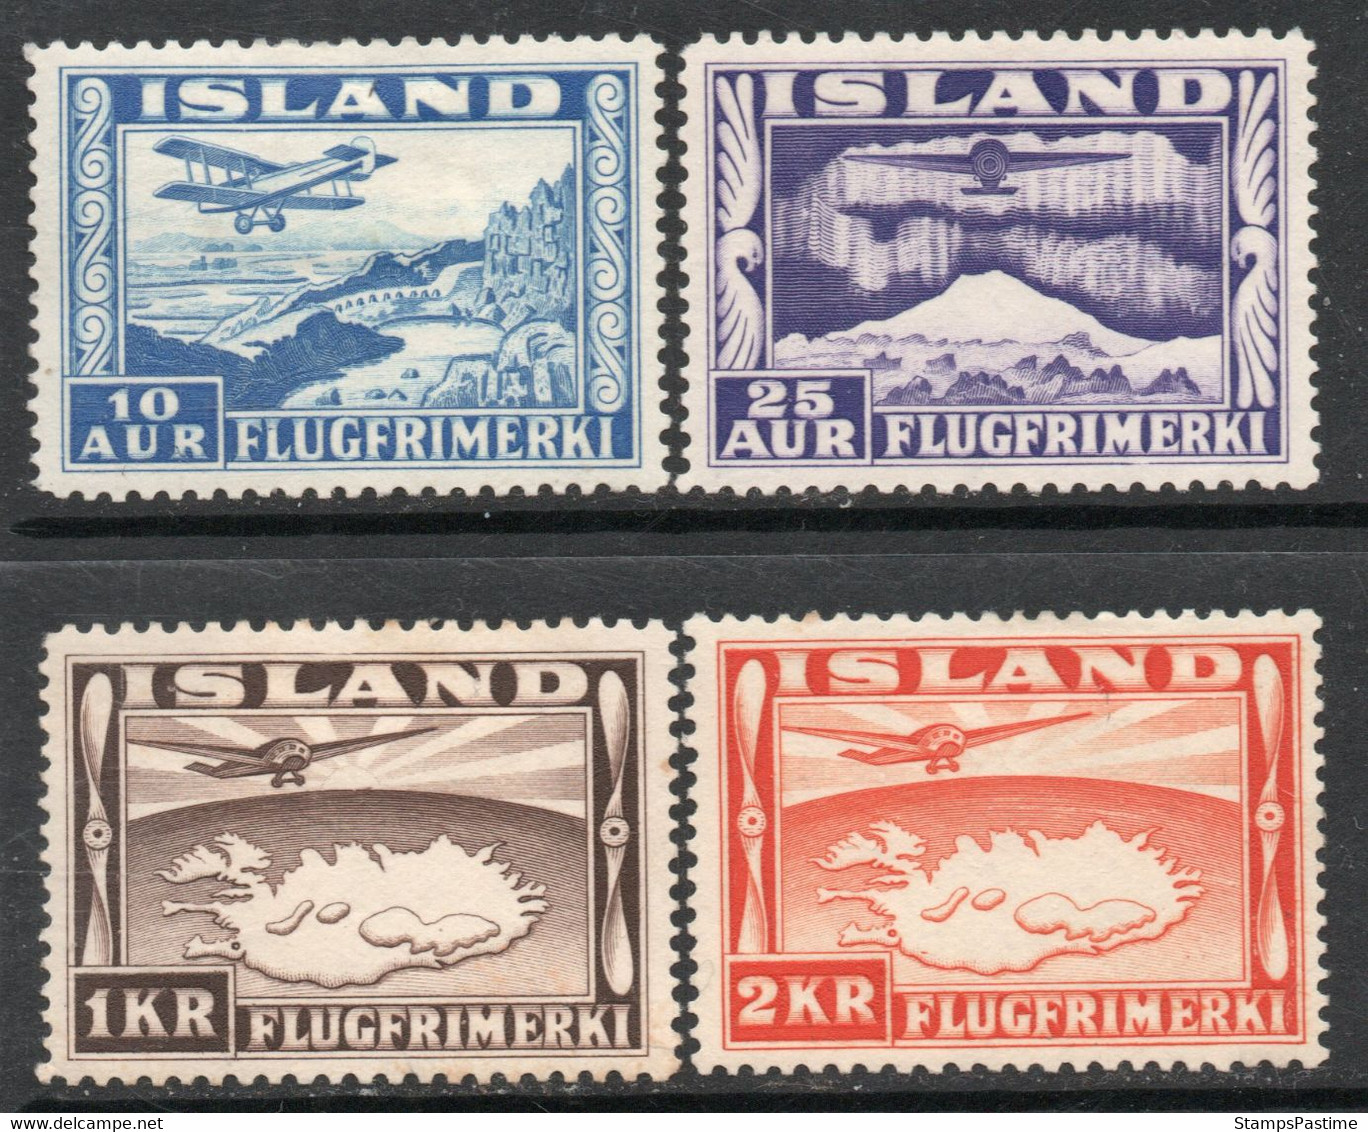 ISLANDIA – ICELAND Serie X 4 Sellos Aéreos Nuevos AVIÓN SOBRE LAGO, AURORA BOREAL Año 1934 – Valorizada En € 47,50 - Poste Aérienne